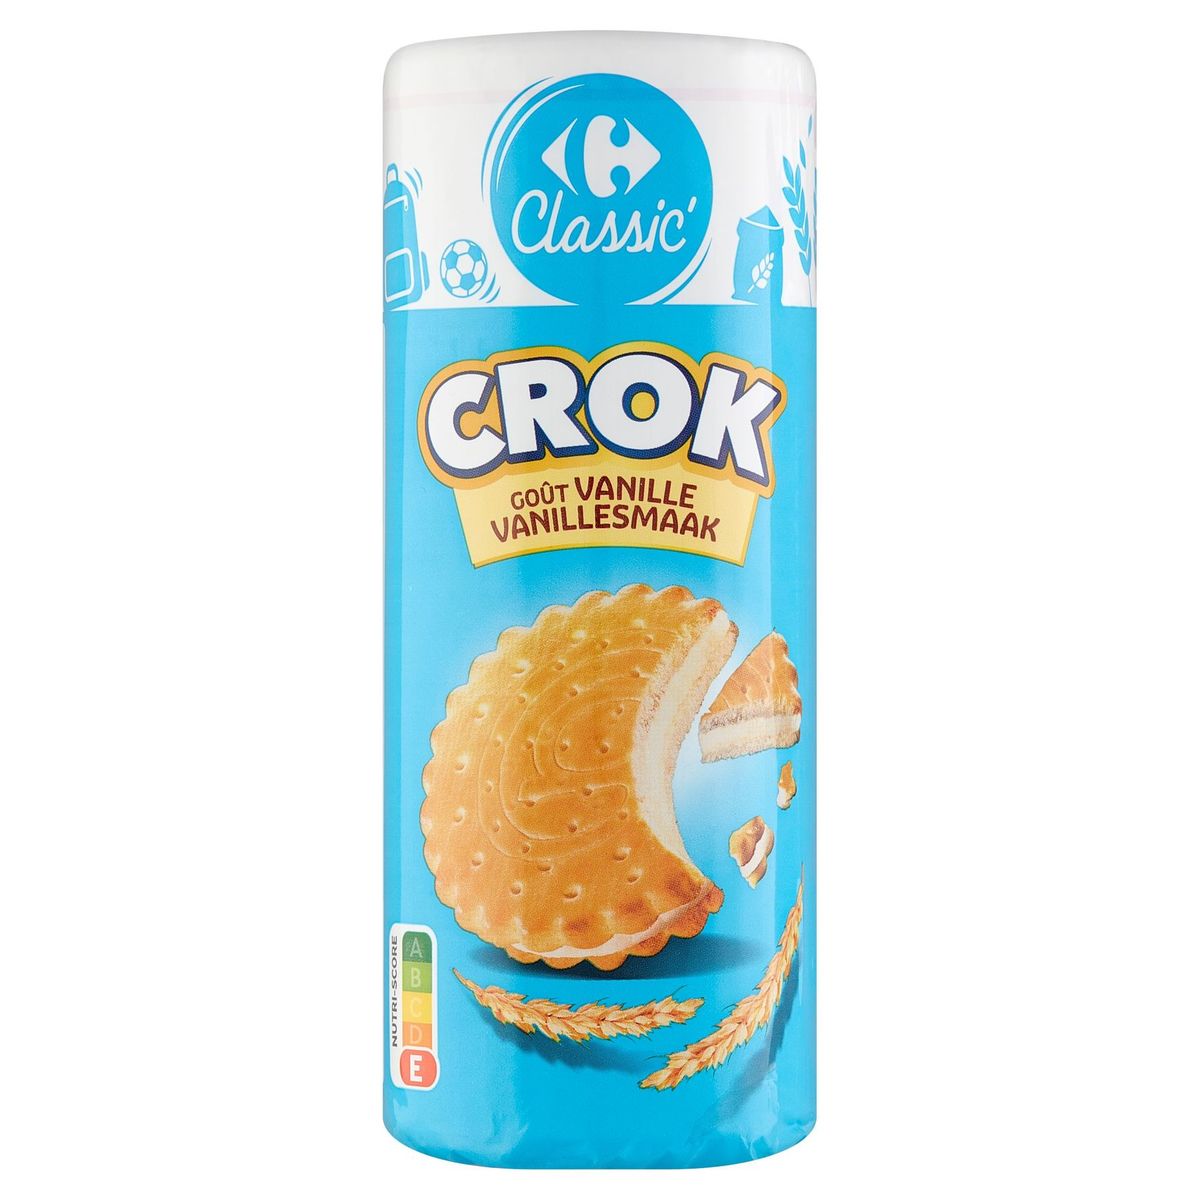 Carrefour Classic' Crok Vanillesmaak 300 g